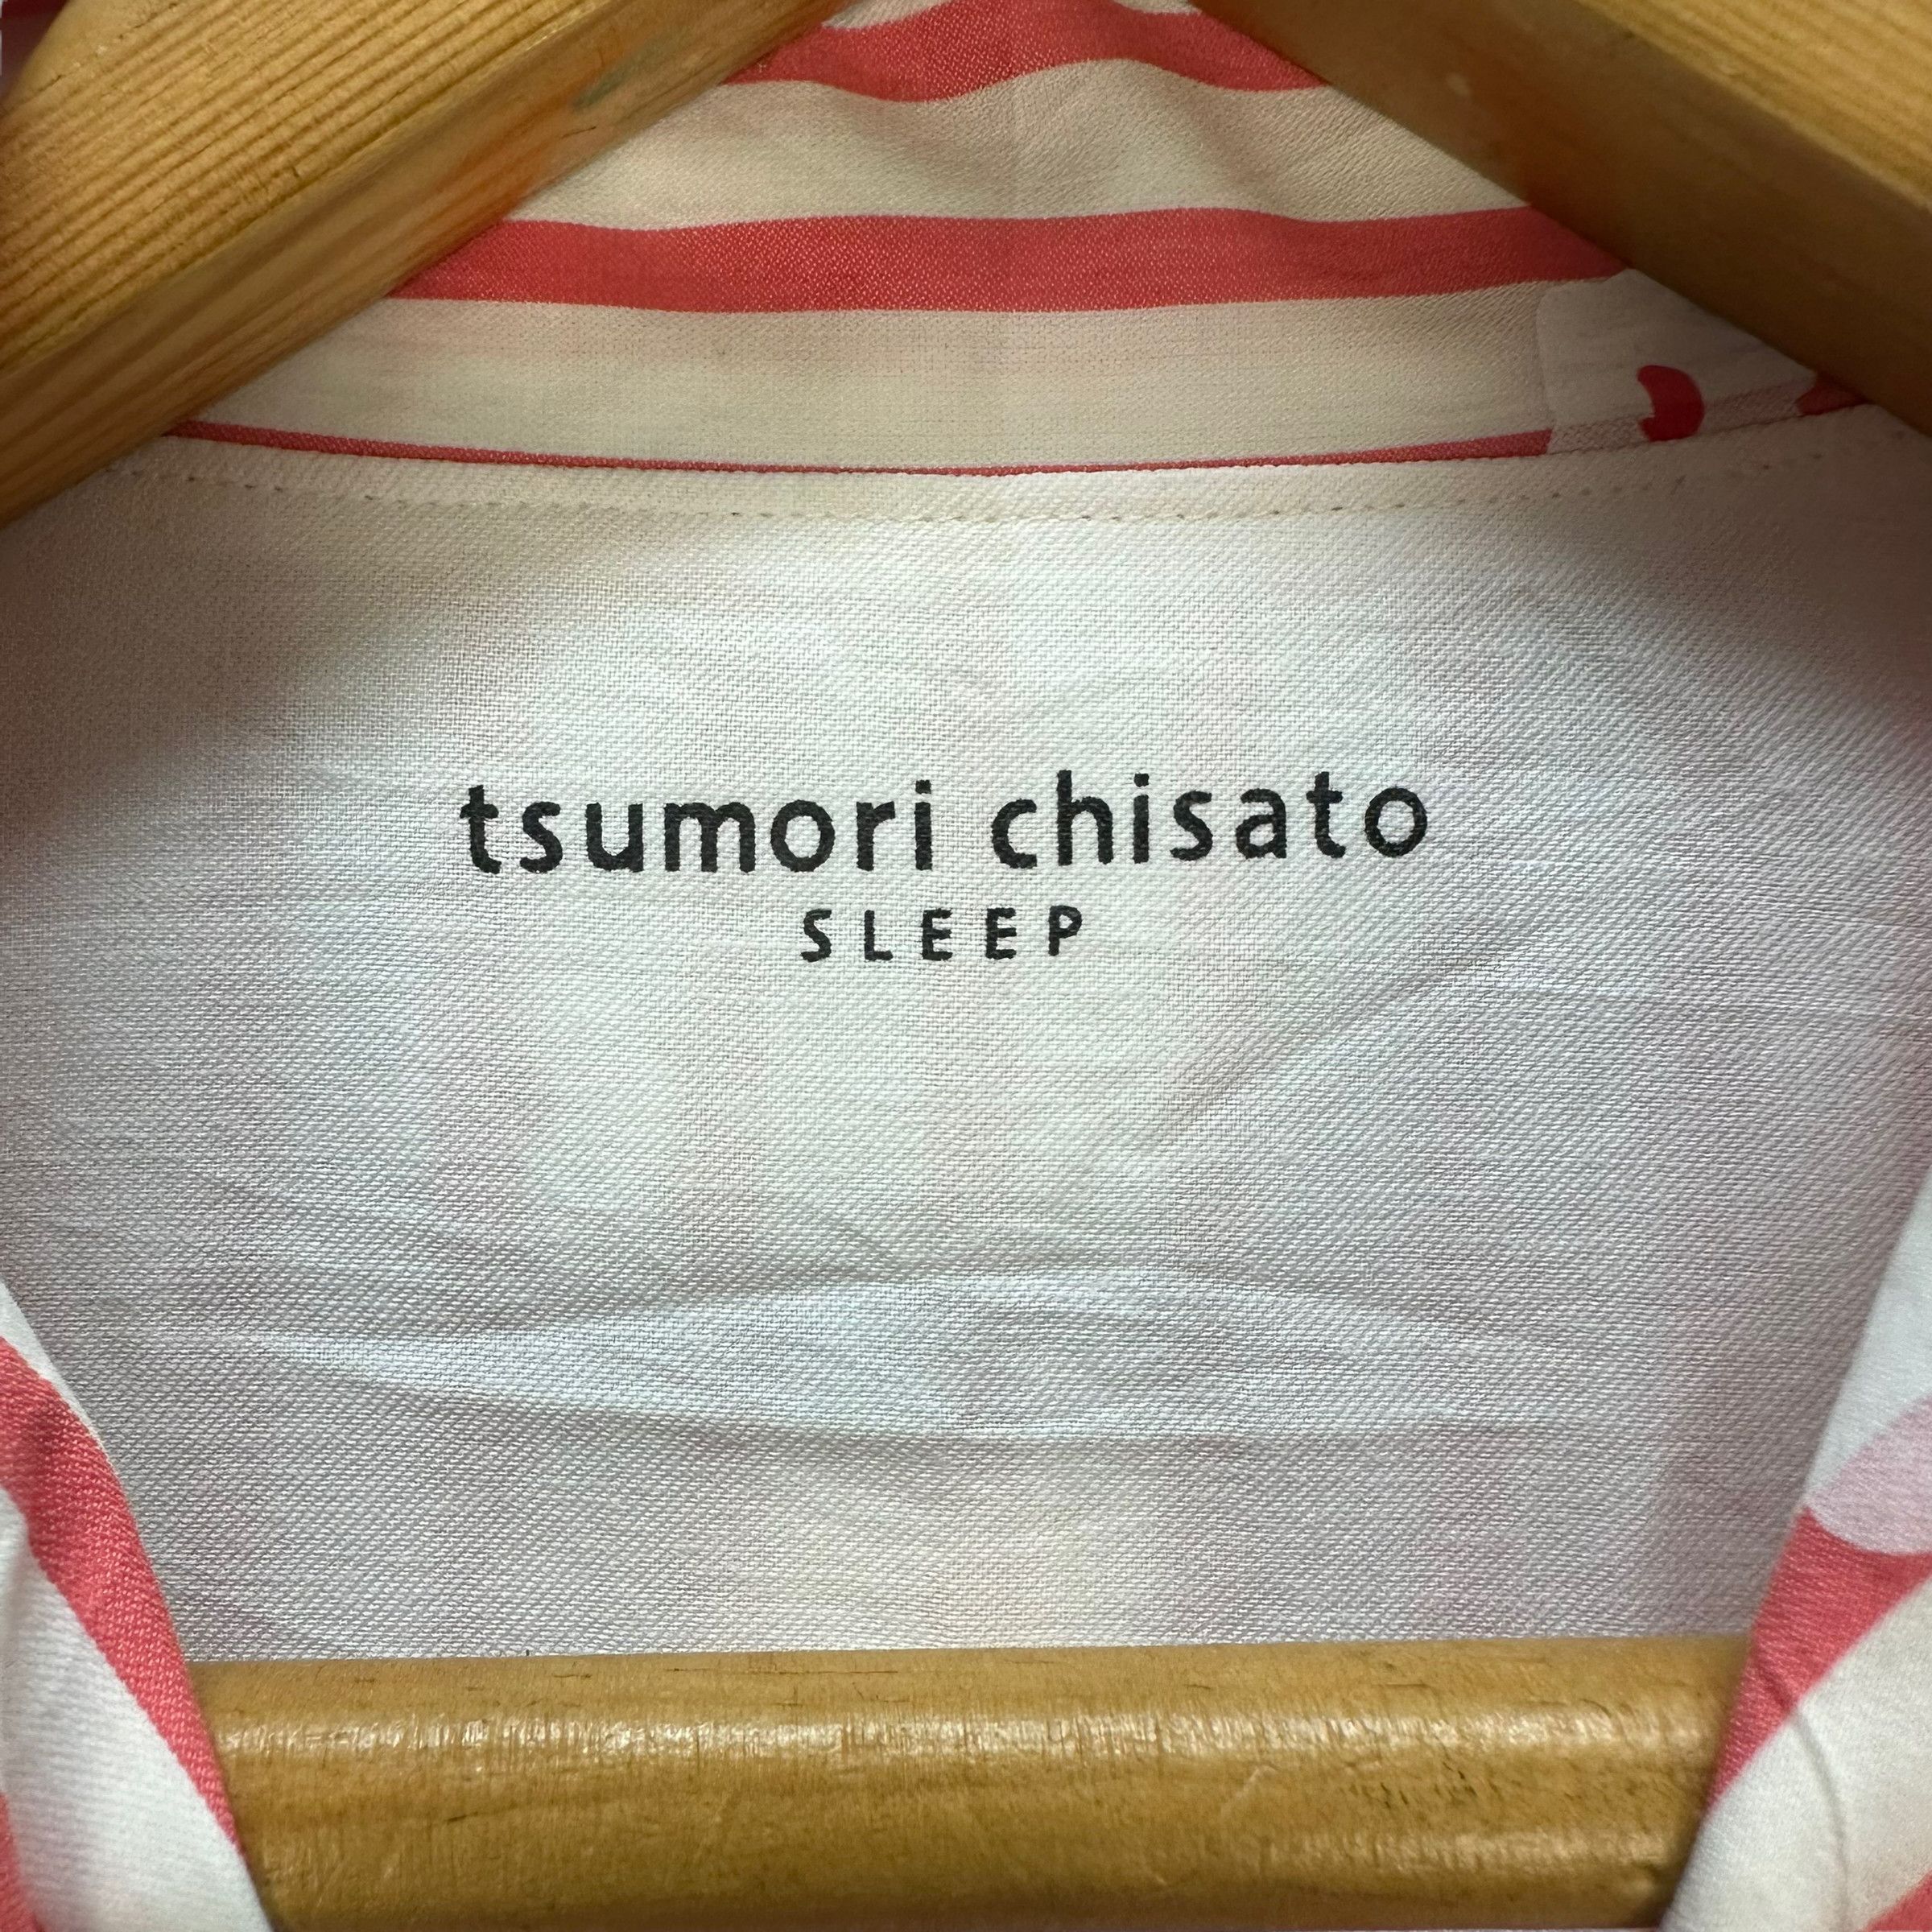 TSUMORI CHISATO SLEEP SHIRT #7716-166 - 6